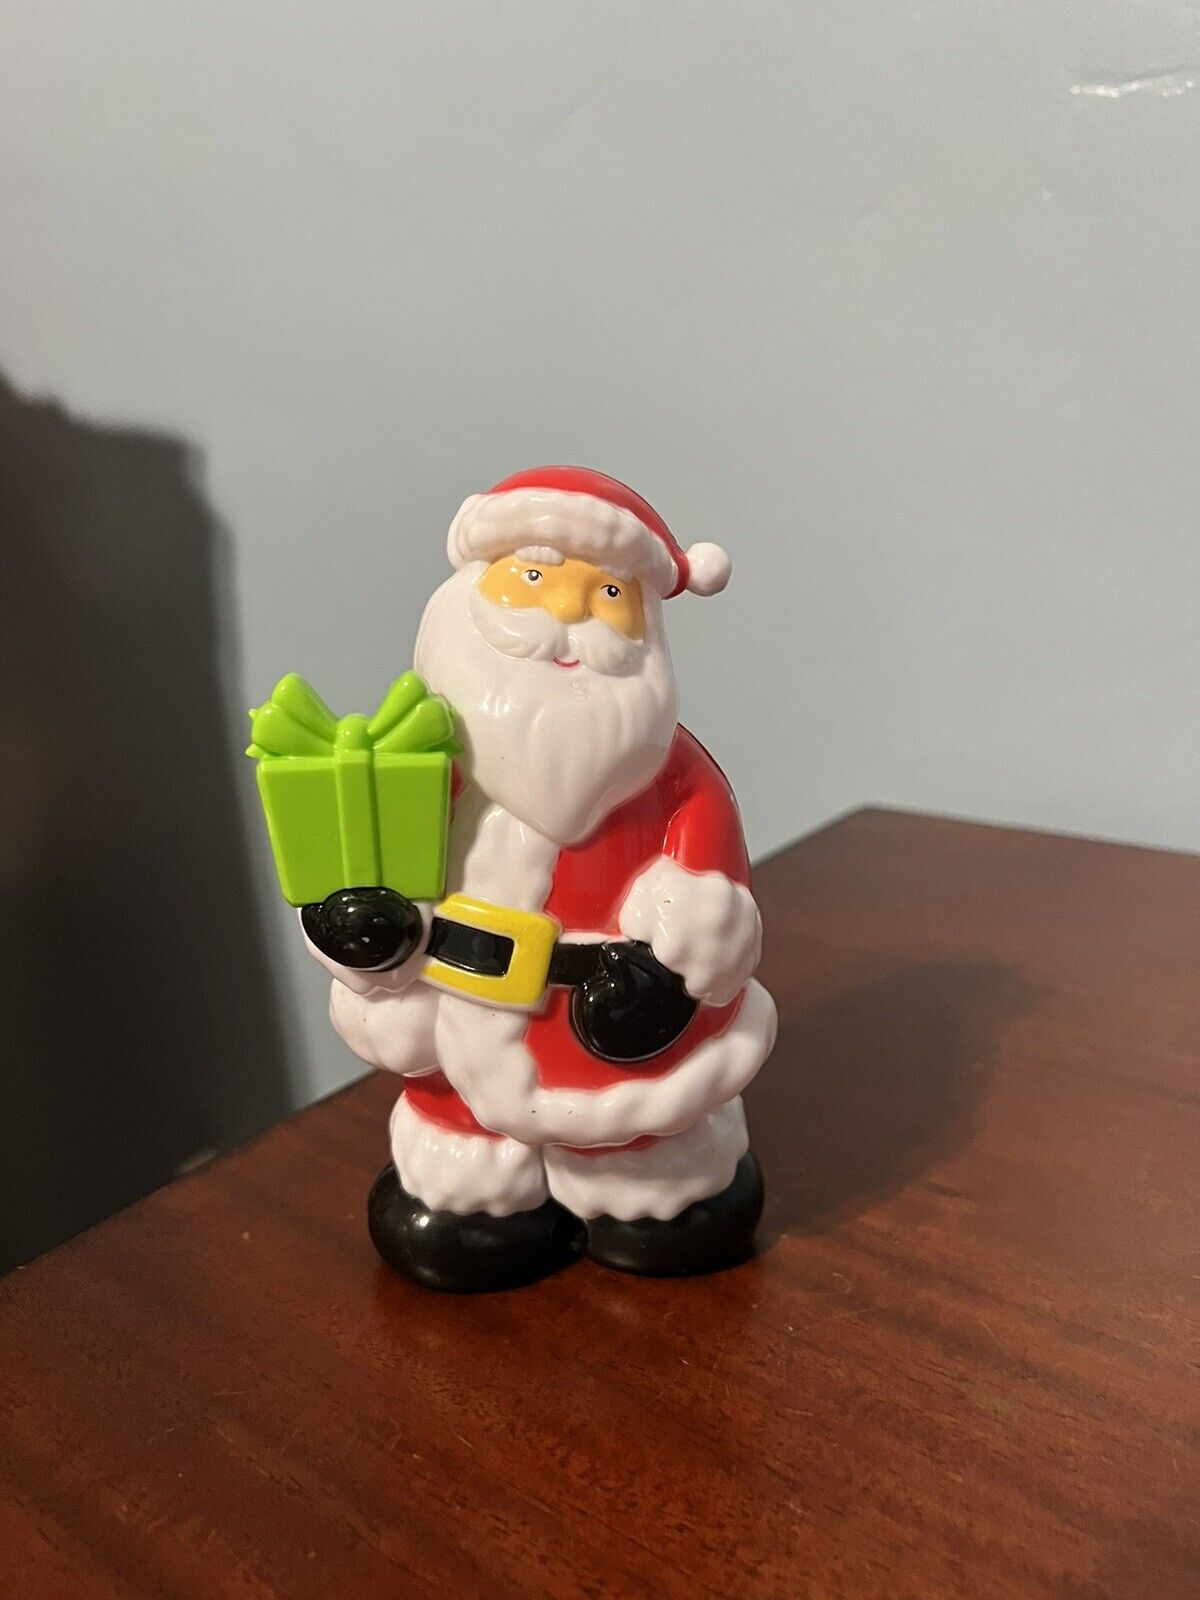 Vintage Talking Santa Claus Plastic Christmas Holiday Decoration 5.75” tall